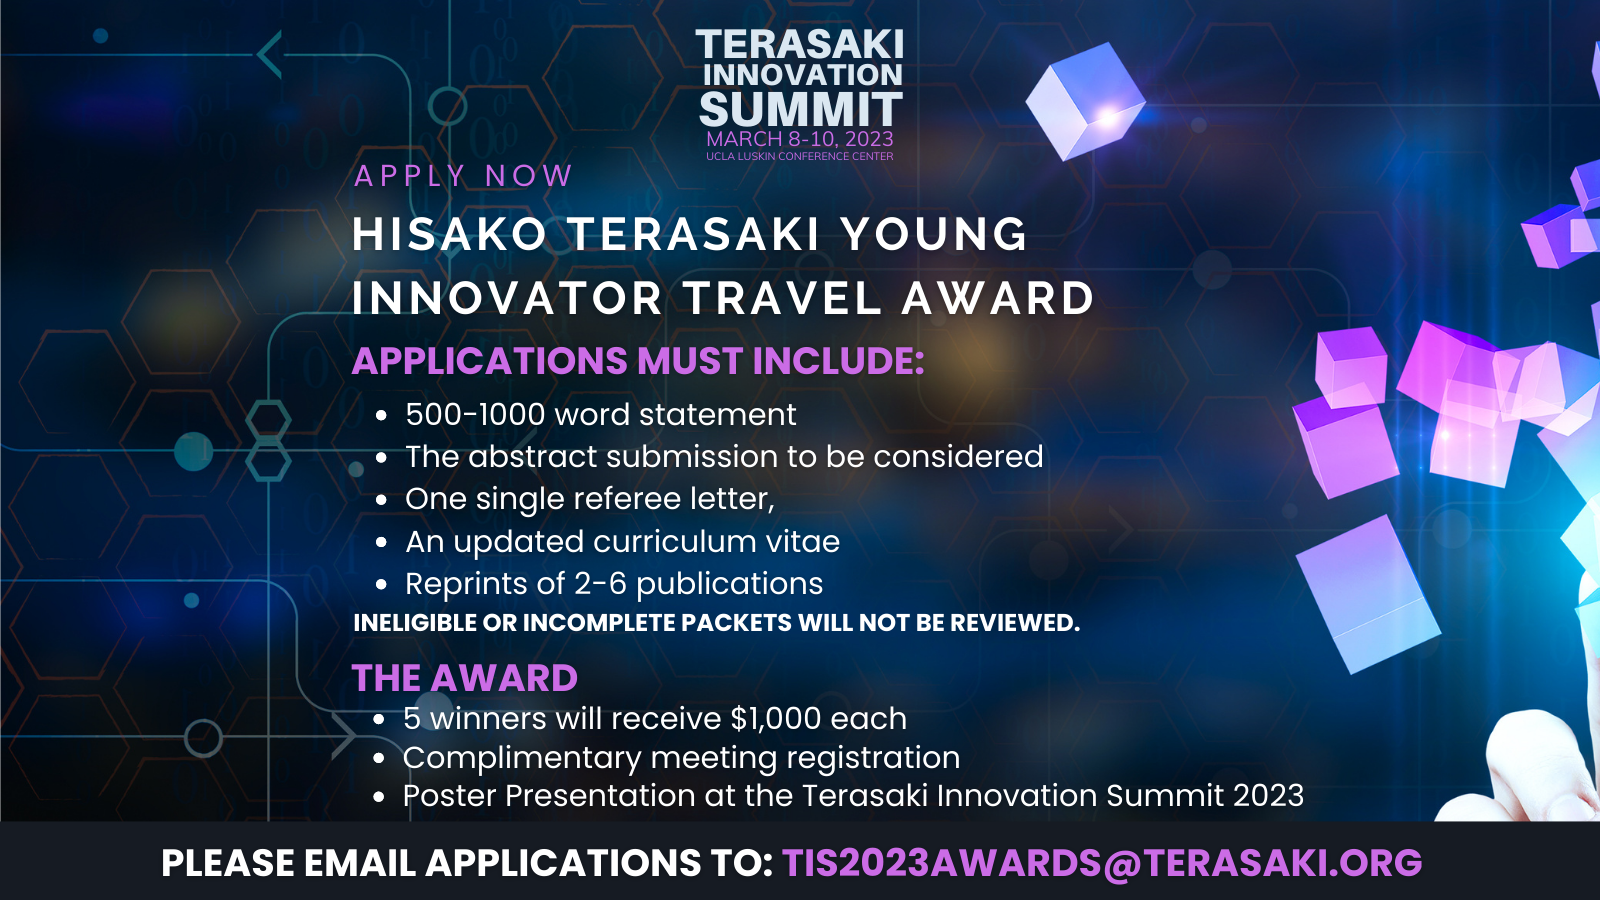 Hisako Terasaki young innovator travel award nomination instruction